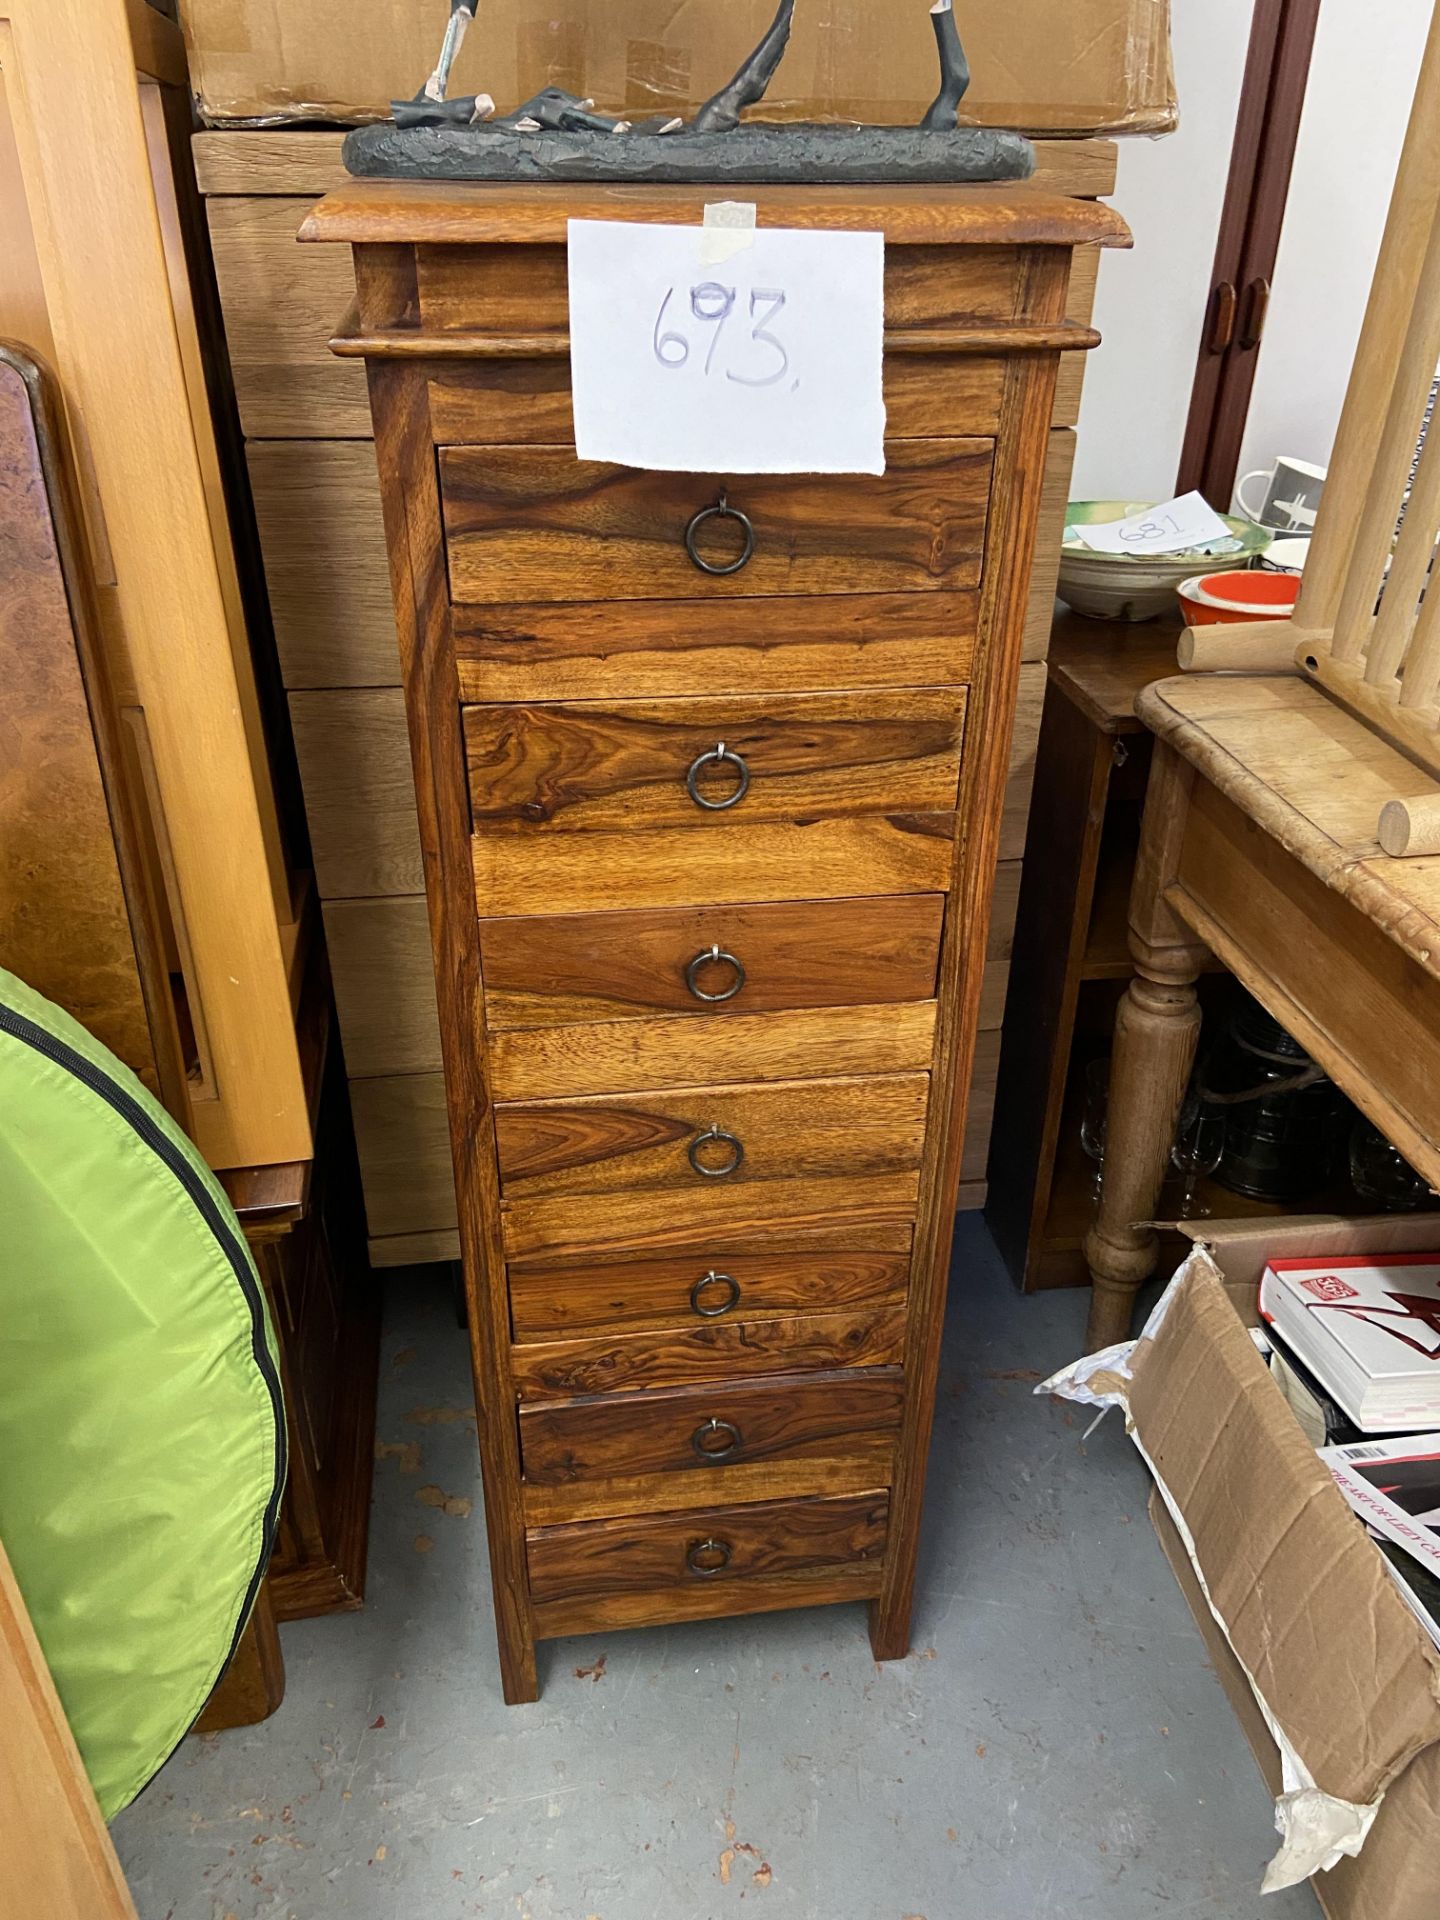 Hardwood 7 drawer chest 3’ x 10” height x 16” width